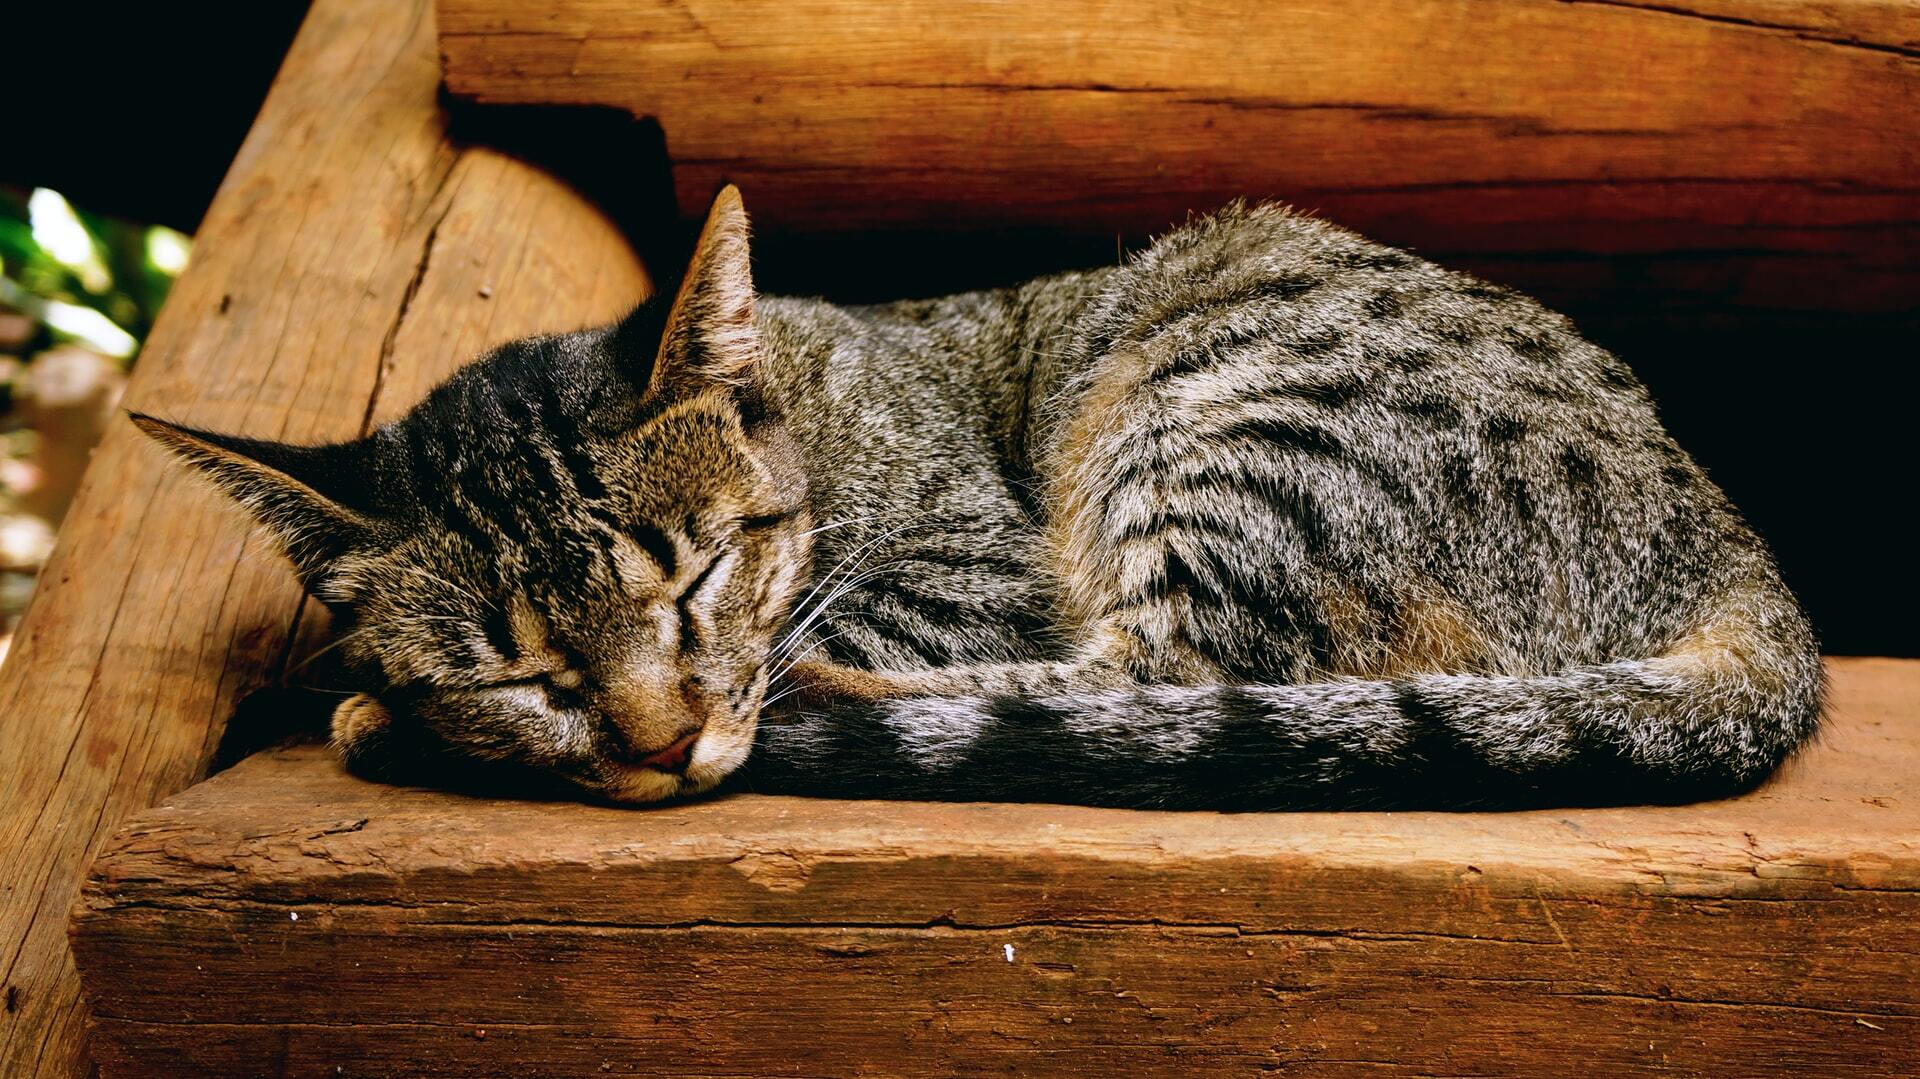 Bladder cancer in cats